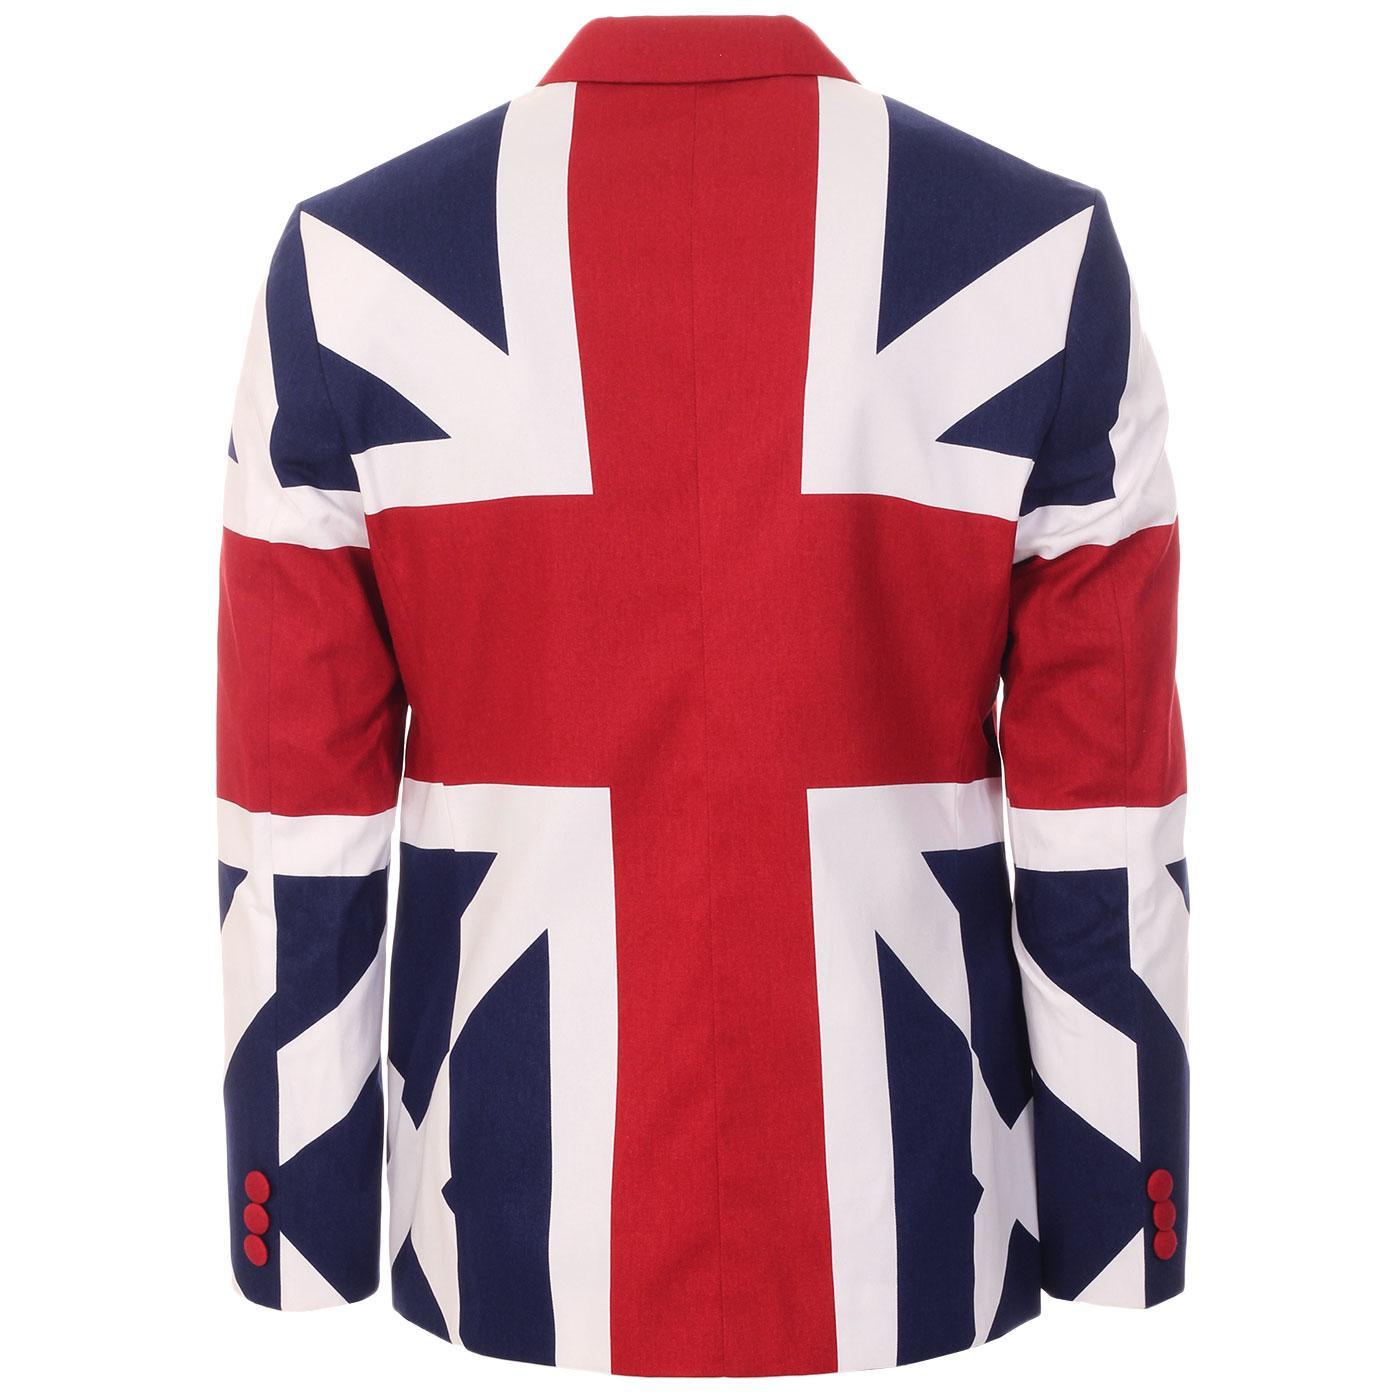 MADCAP ENGLAND Townshend Retro Mod Union Jack Blazer Jacket